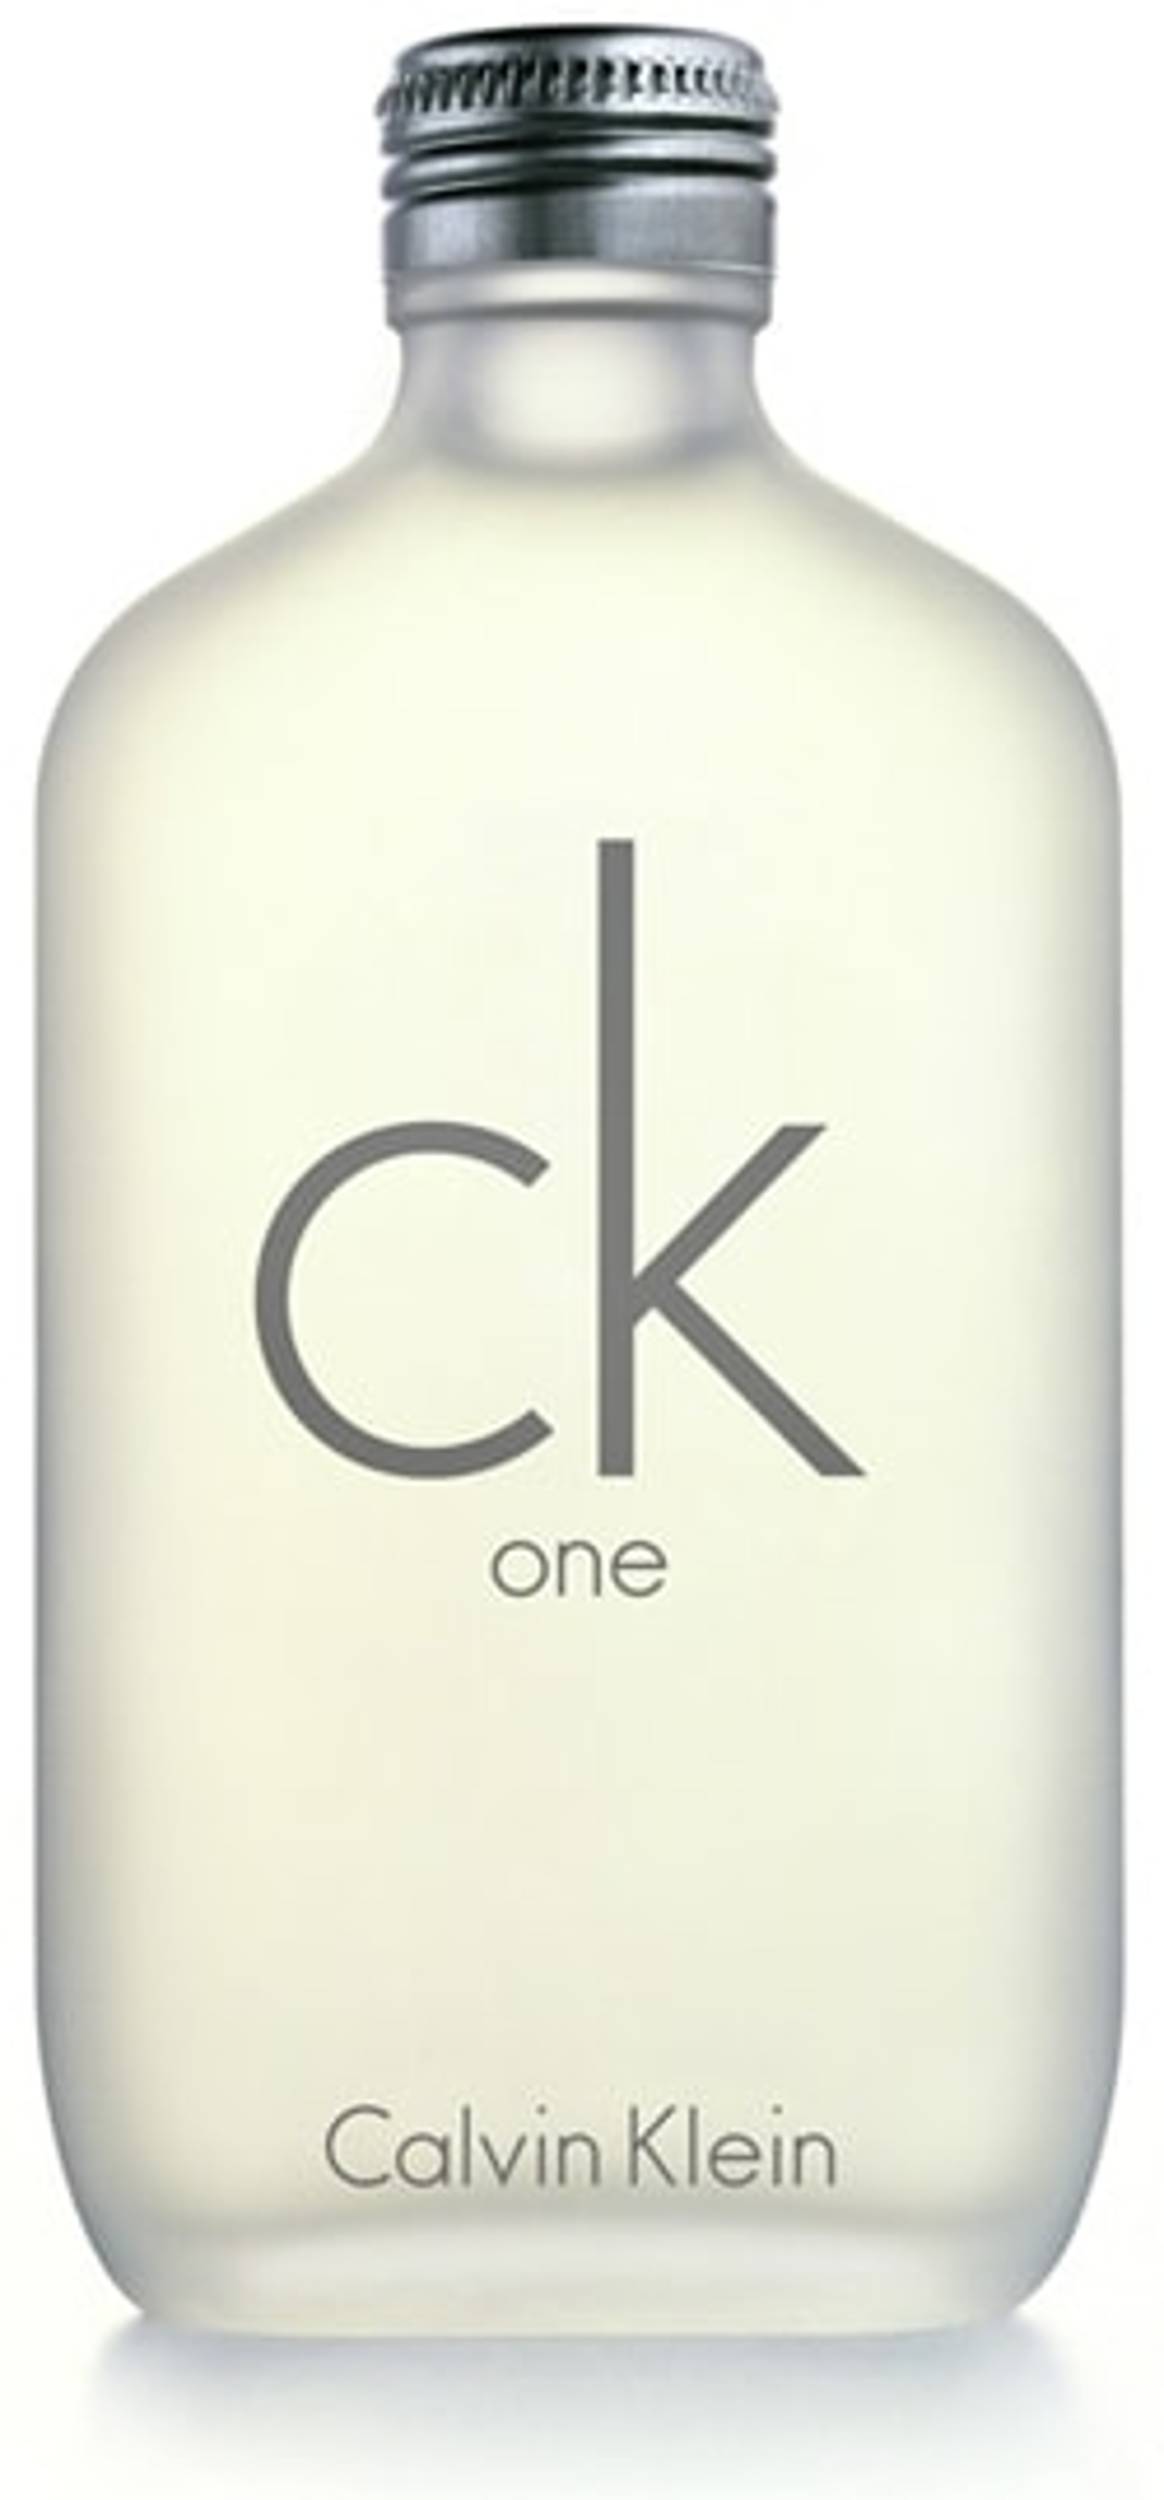 CK One launcht Modelinie